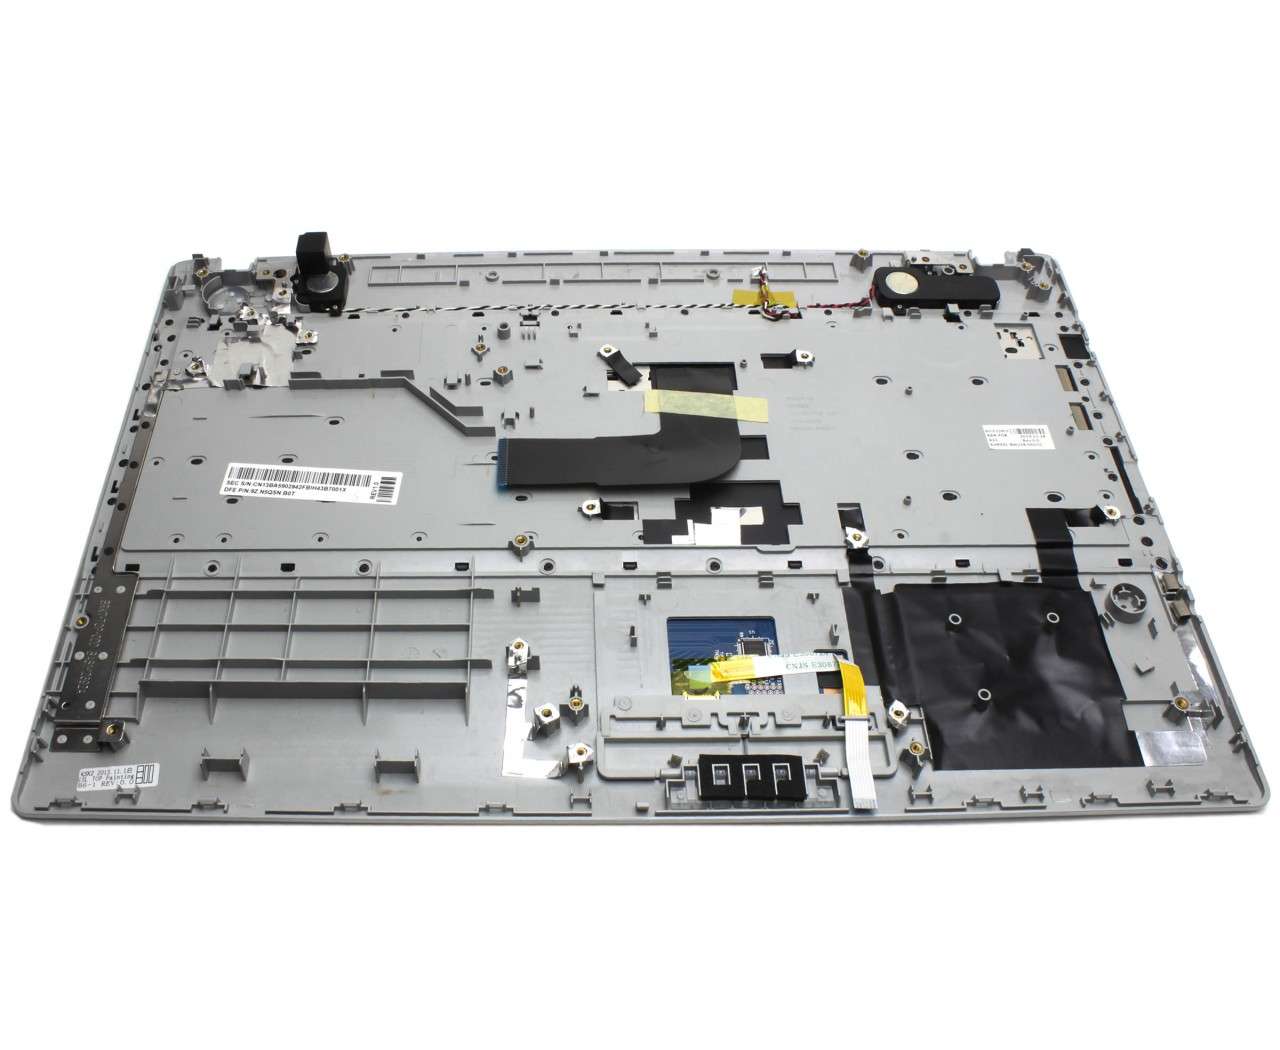 Tastatura Samsung RV515 neagra cu Palmrest argintiu imagine 2021 powerlaptop.ro